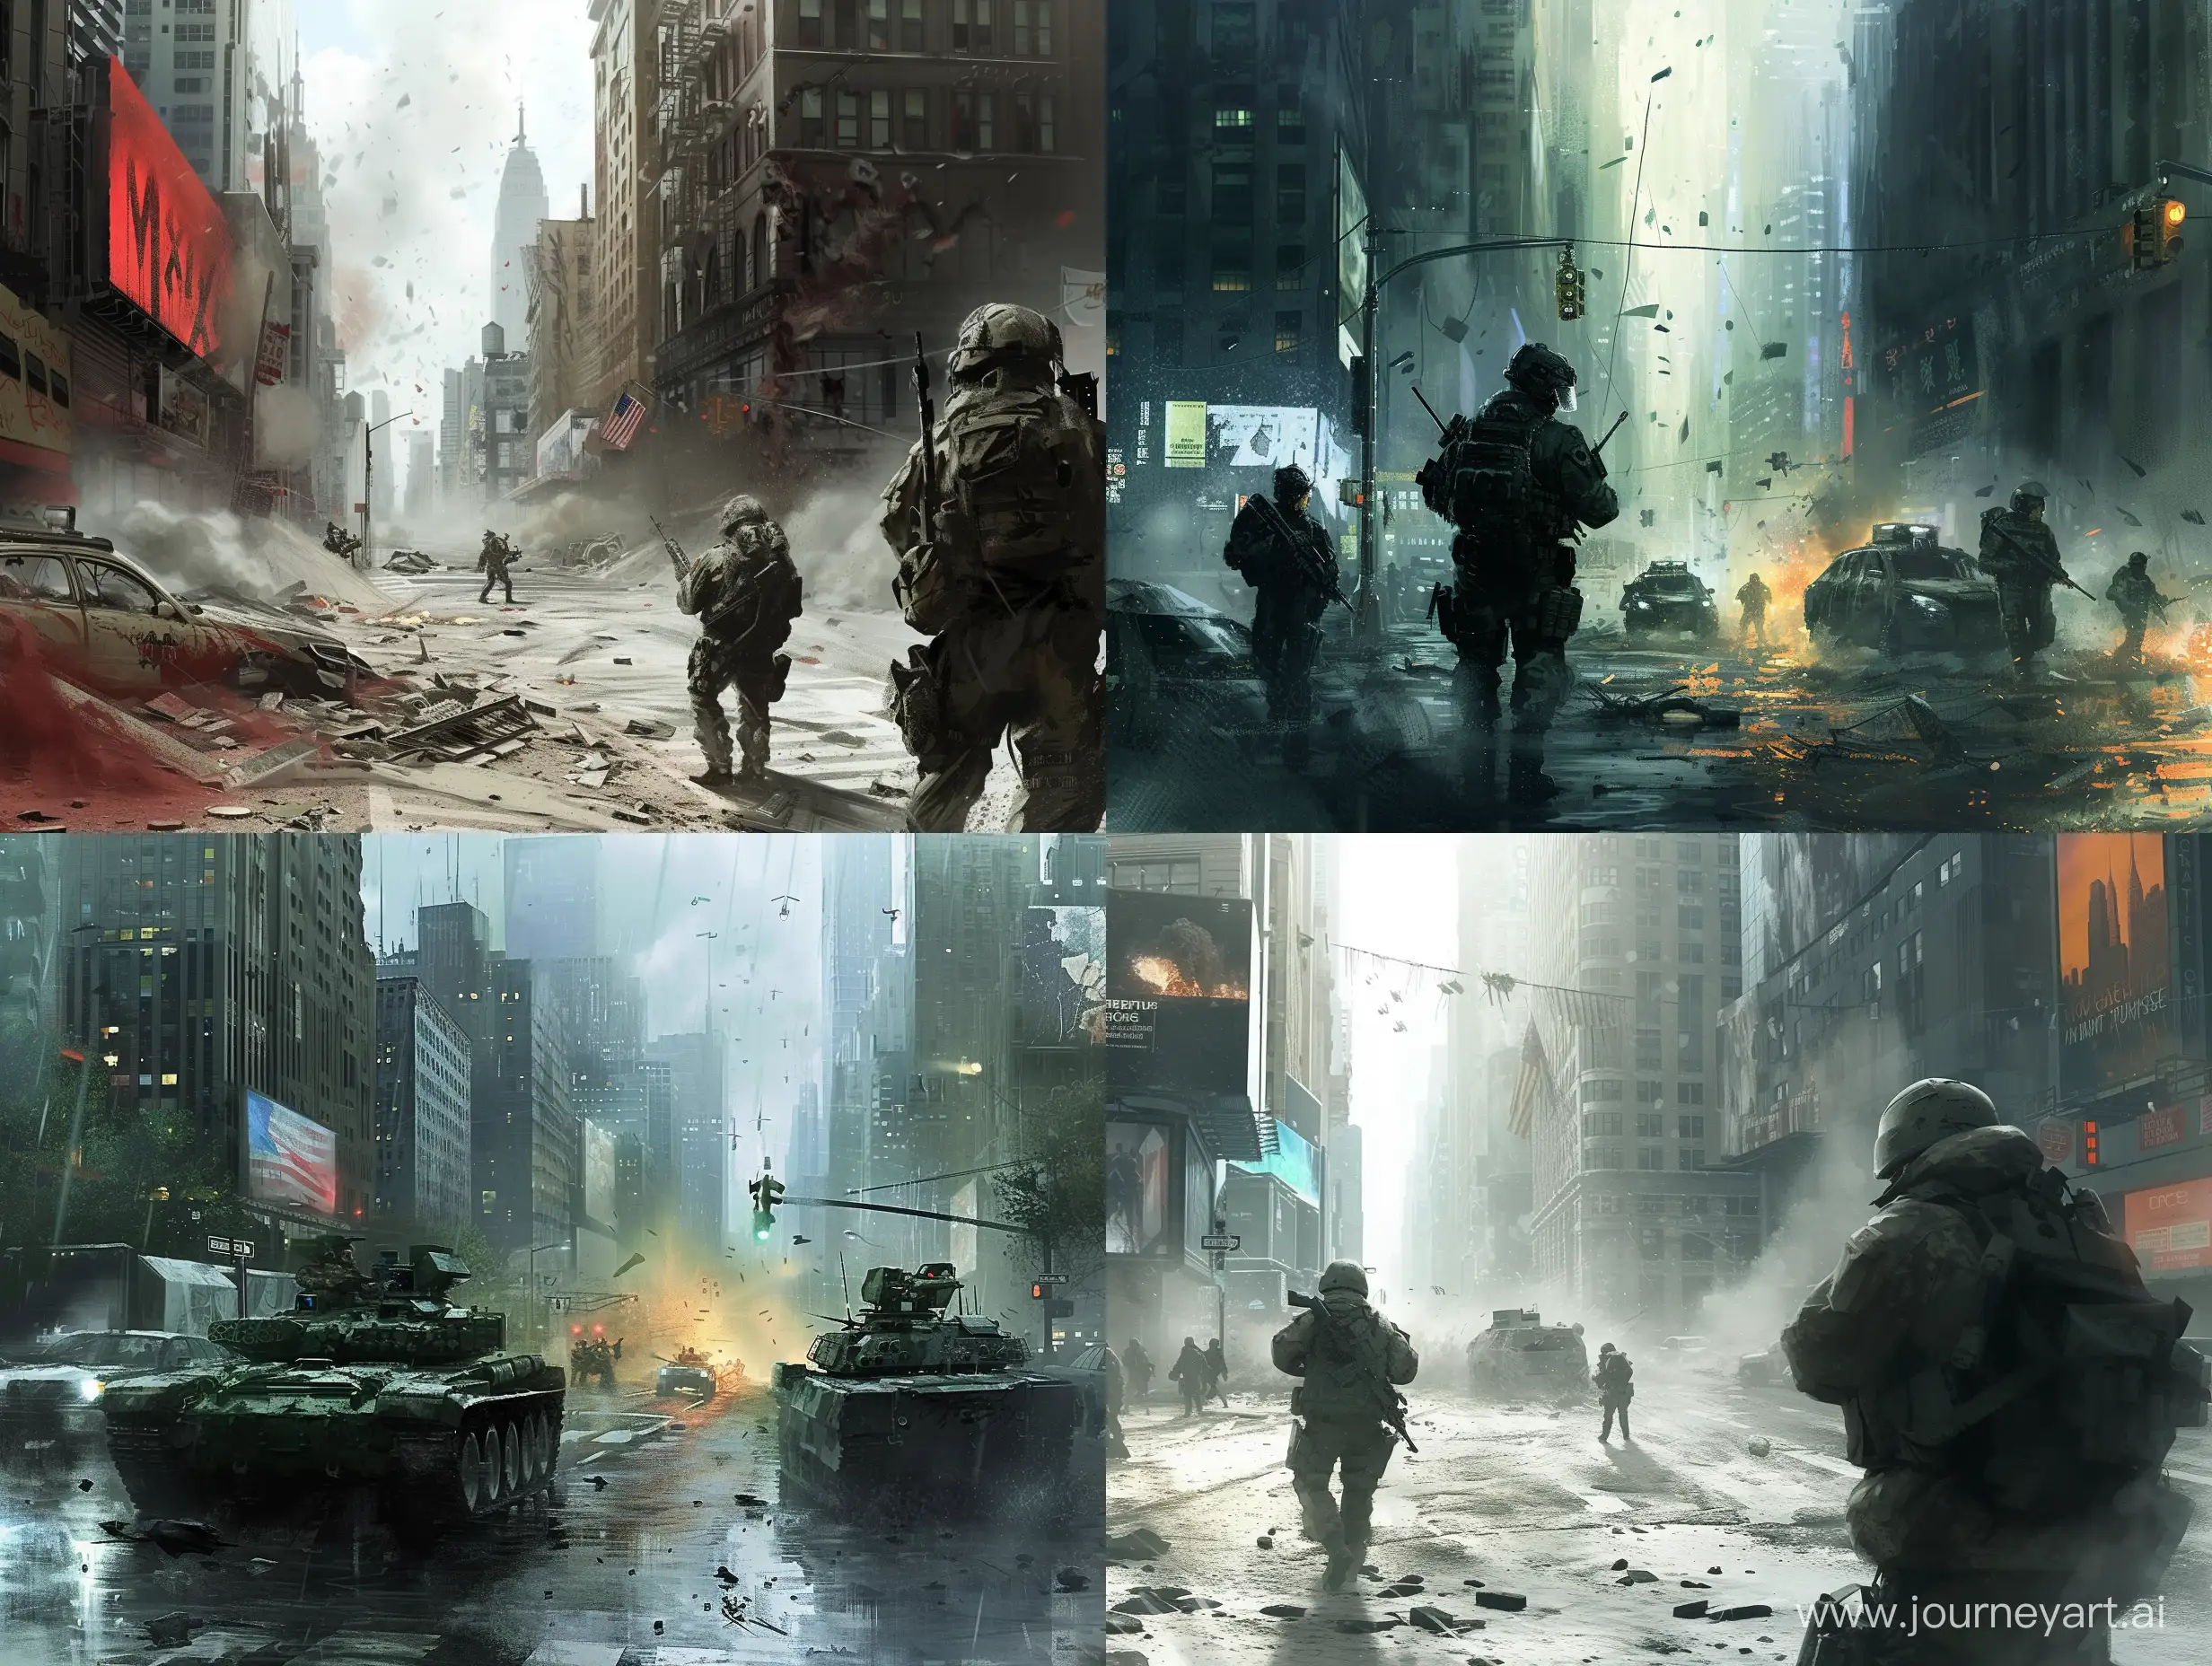 Intense-Urban-Warfare-Scene-with-Advanced-Technology-Version-6